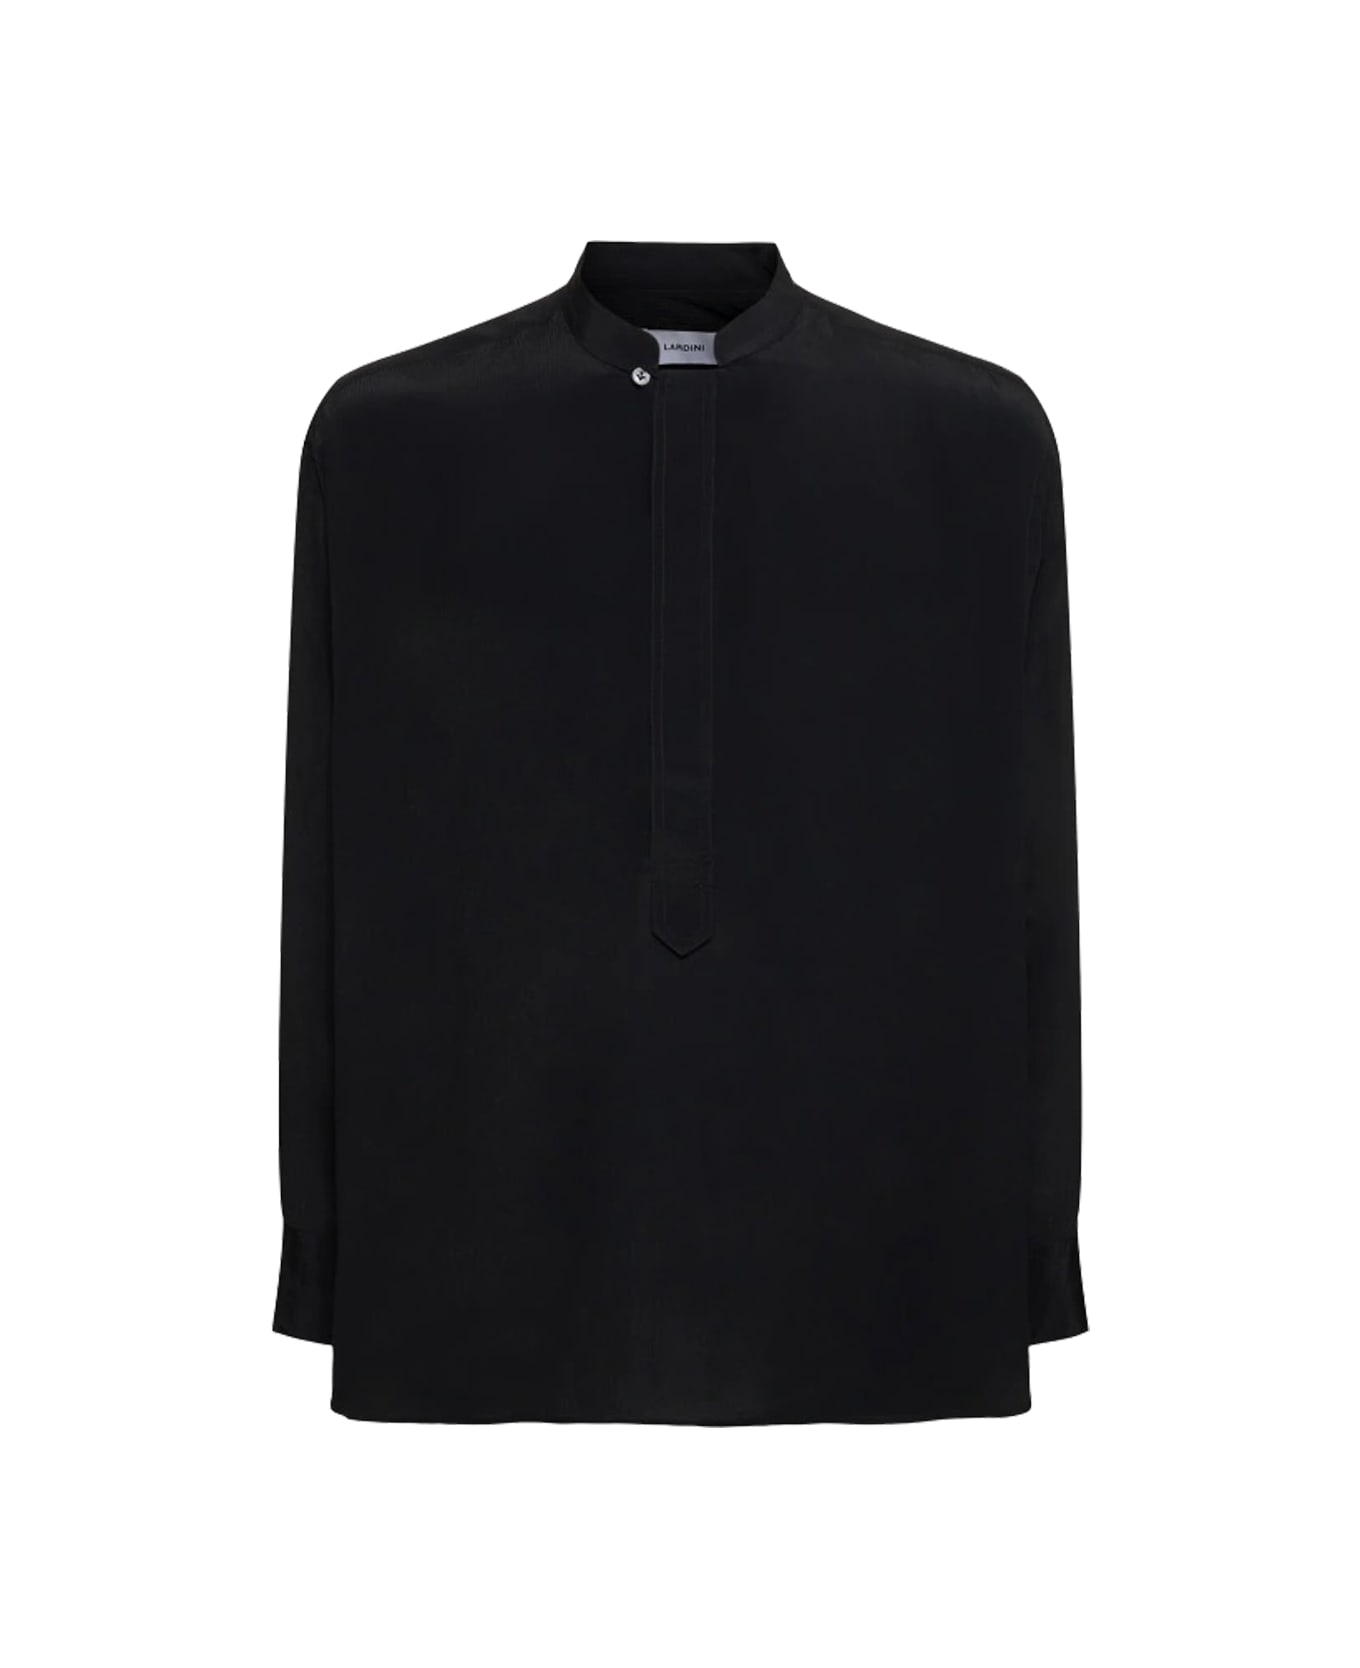 Lardini Shirt - Black